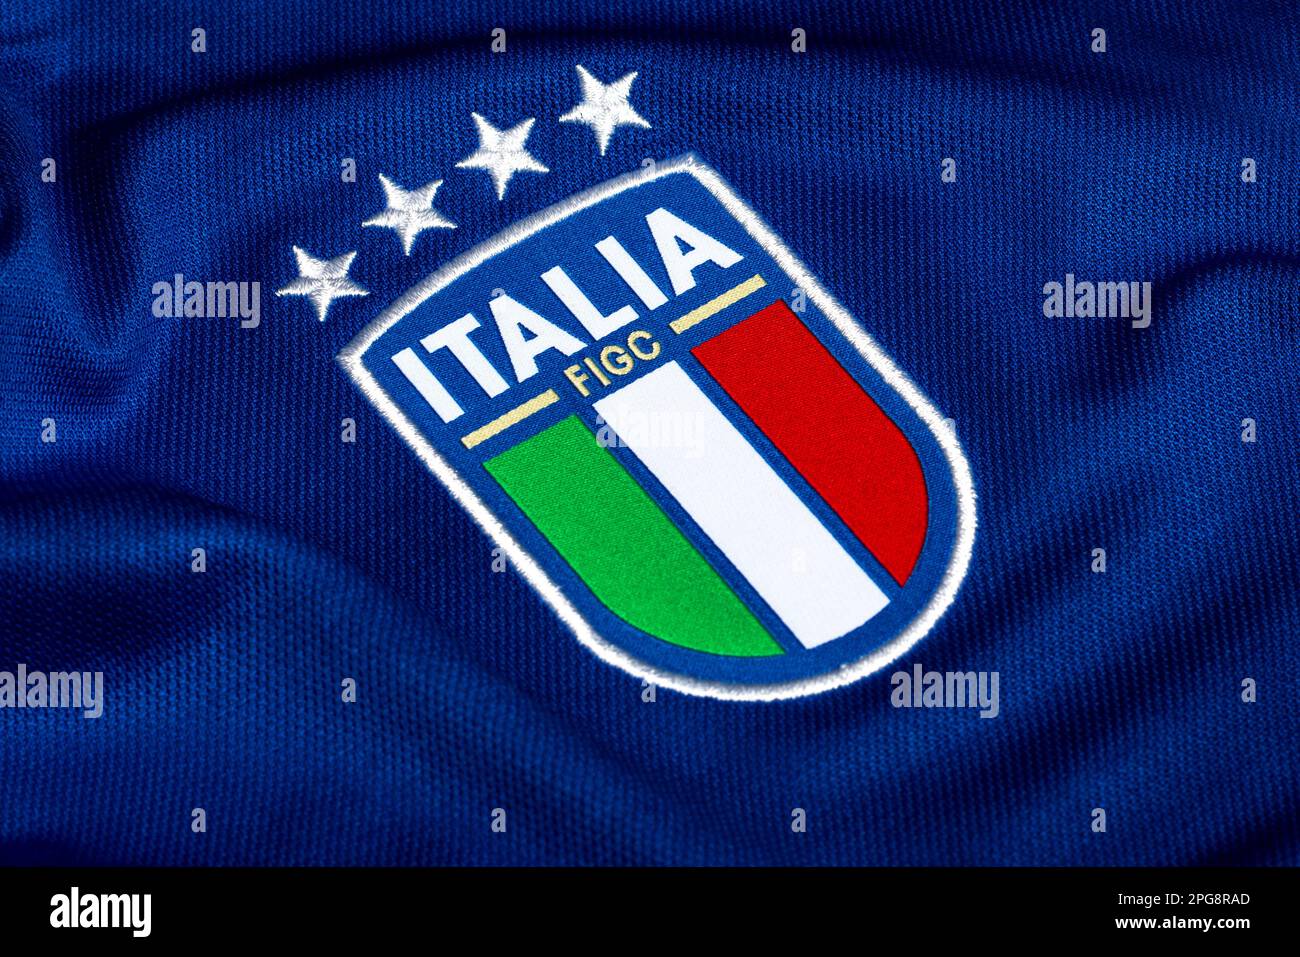 Close up of Italian National Football Team kit Stock Photo